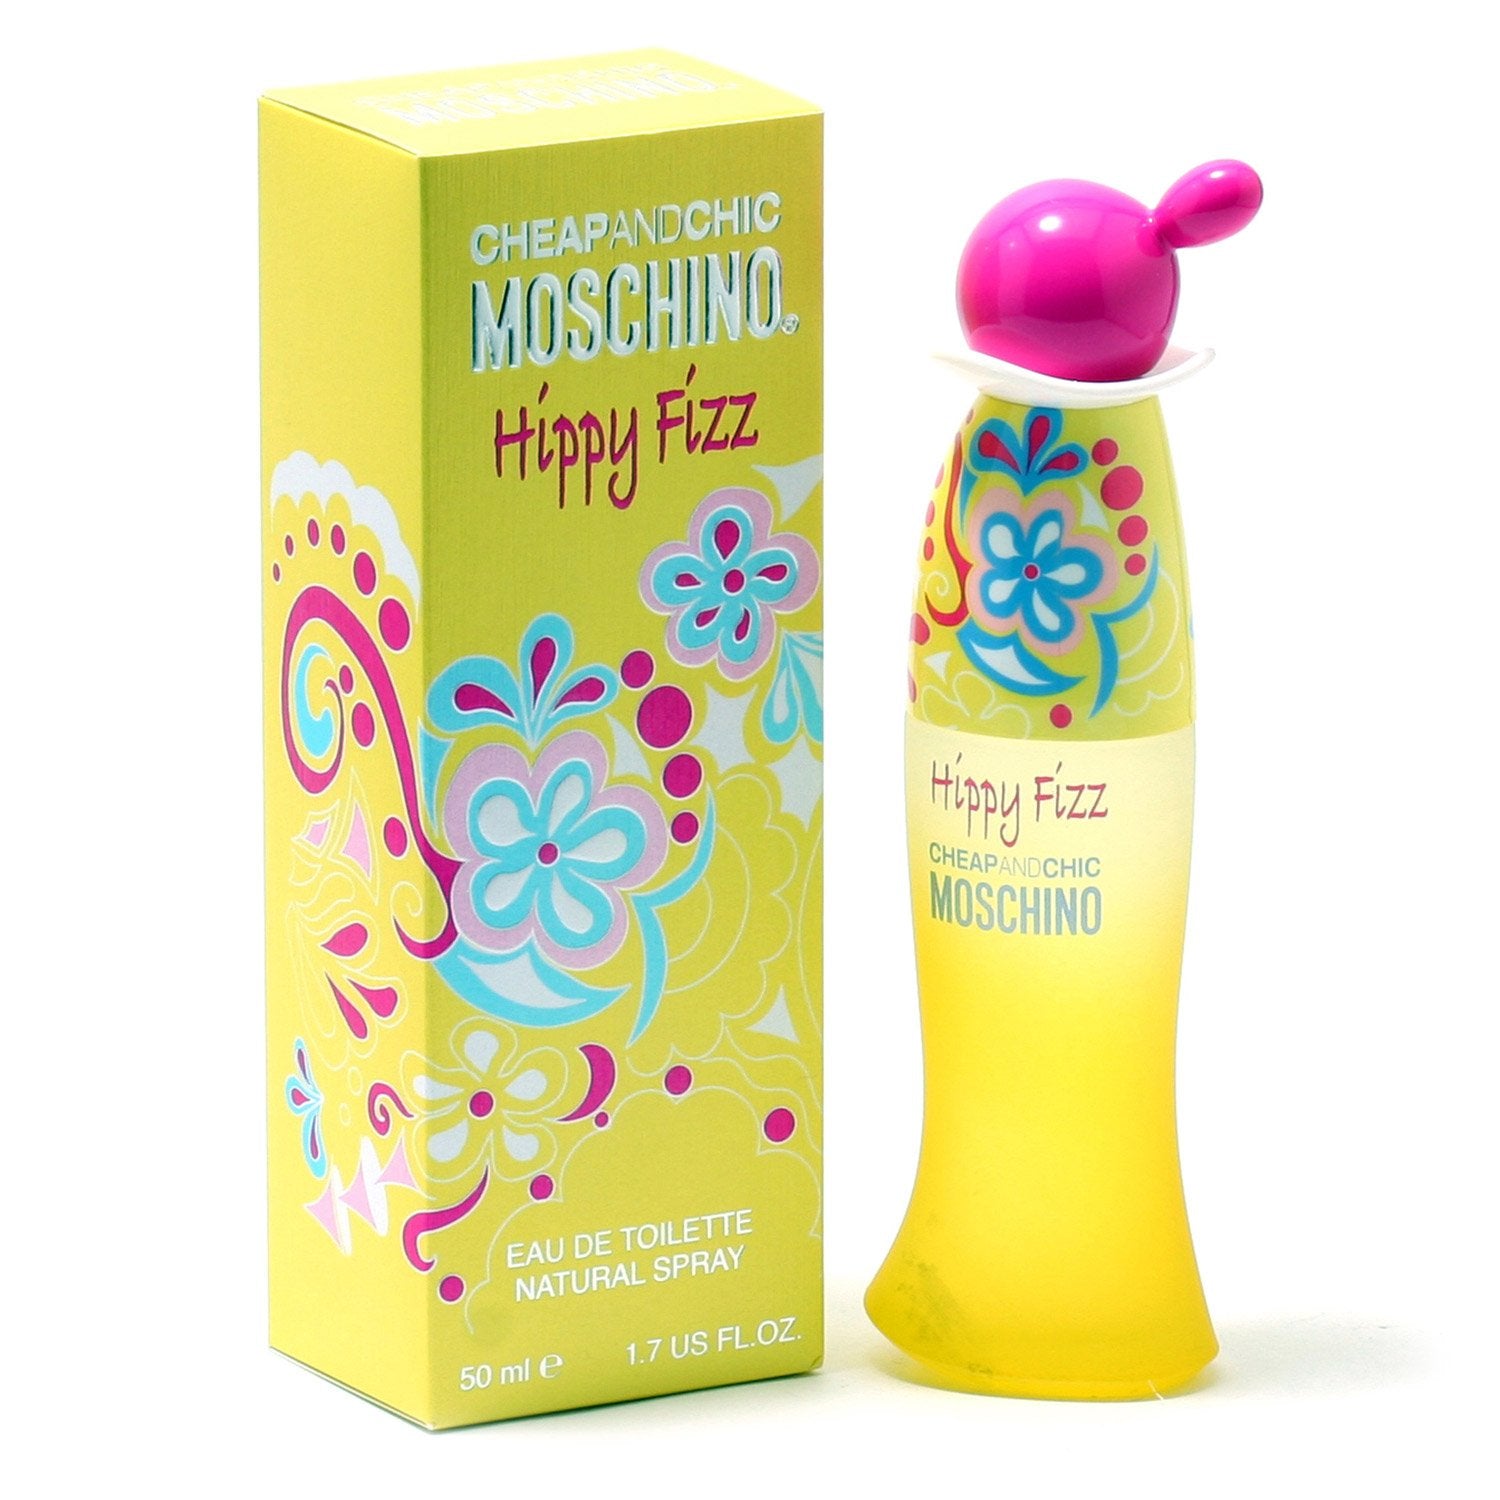 Perfume - MOSCHINO HIPPY FIZZ FOR WOMEN -  EAU DE TOILETTE SPRAY, 1.7 OZ